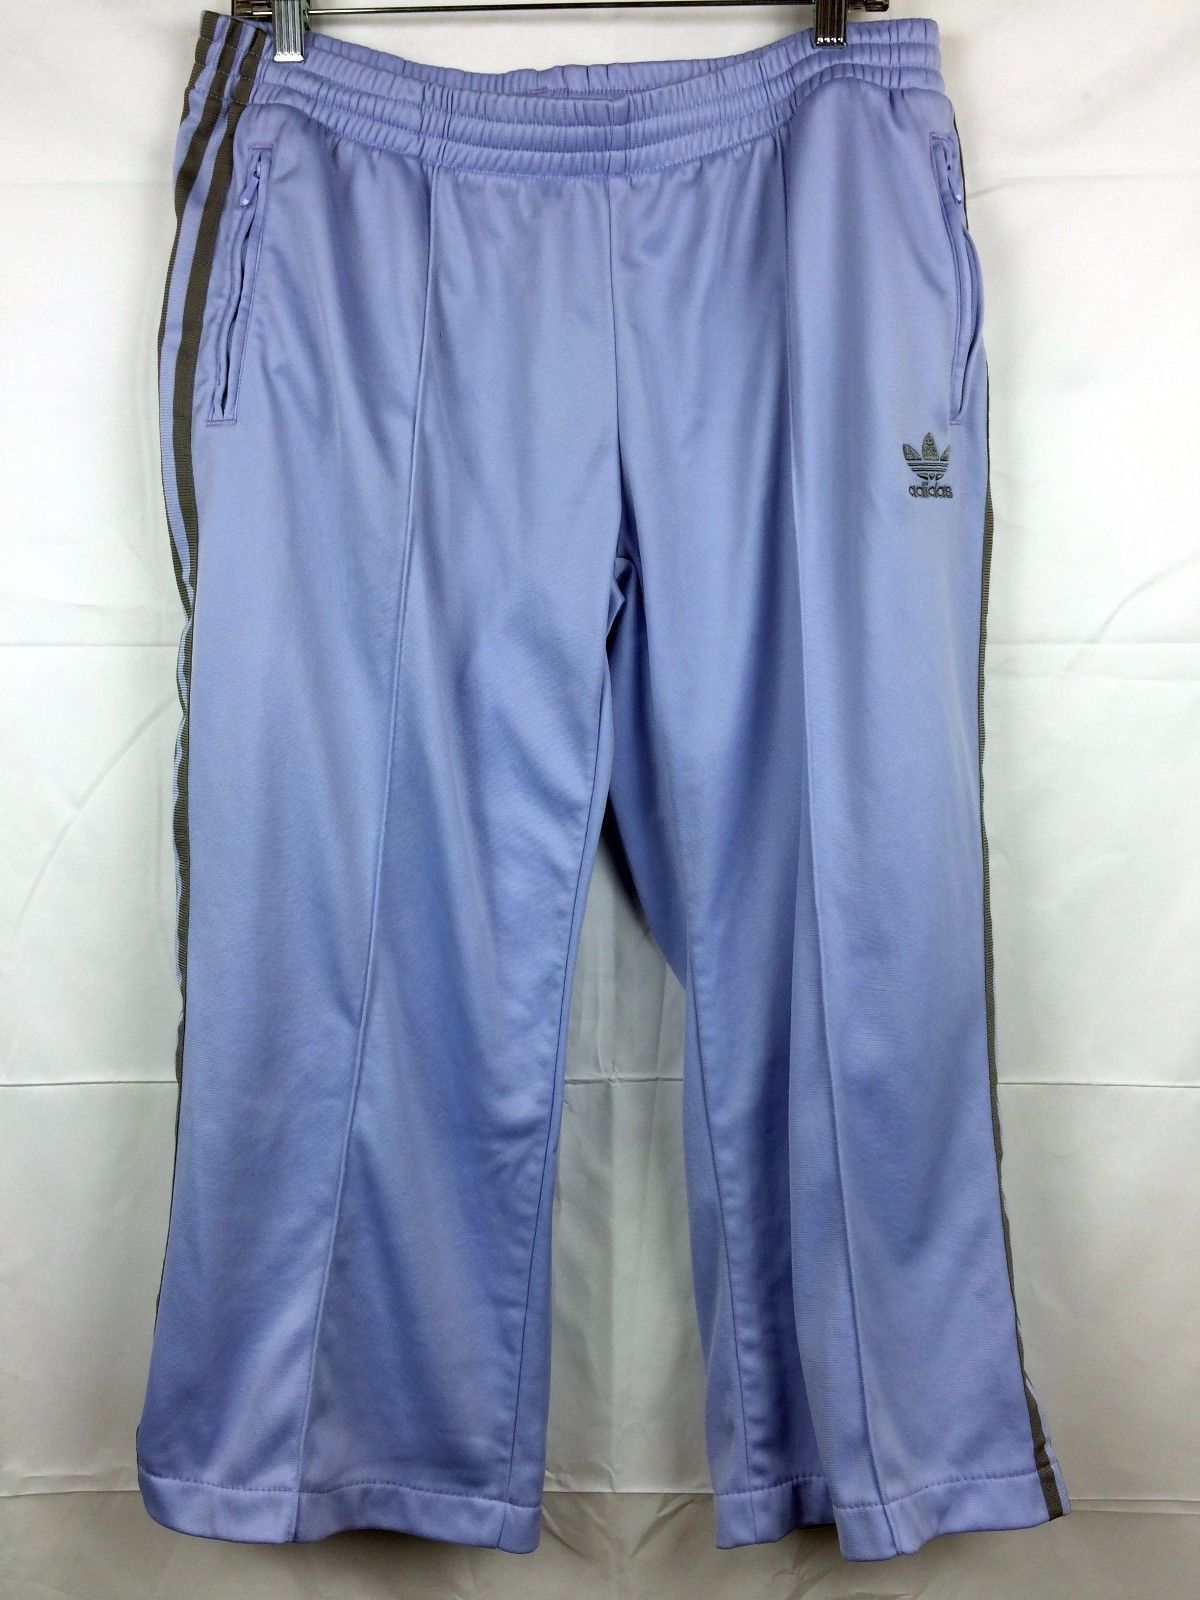 Adidas Women's Capri Track Pants Light Blue and 50 similar items